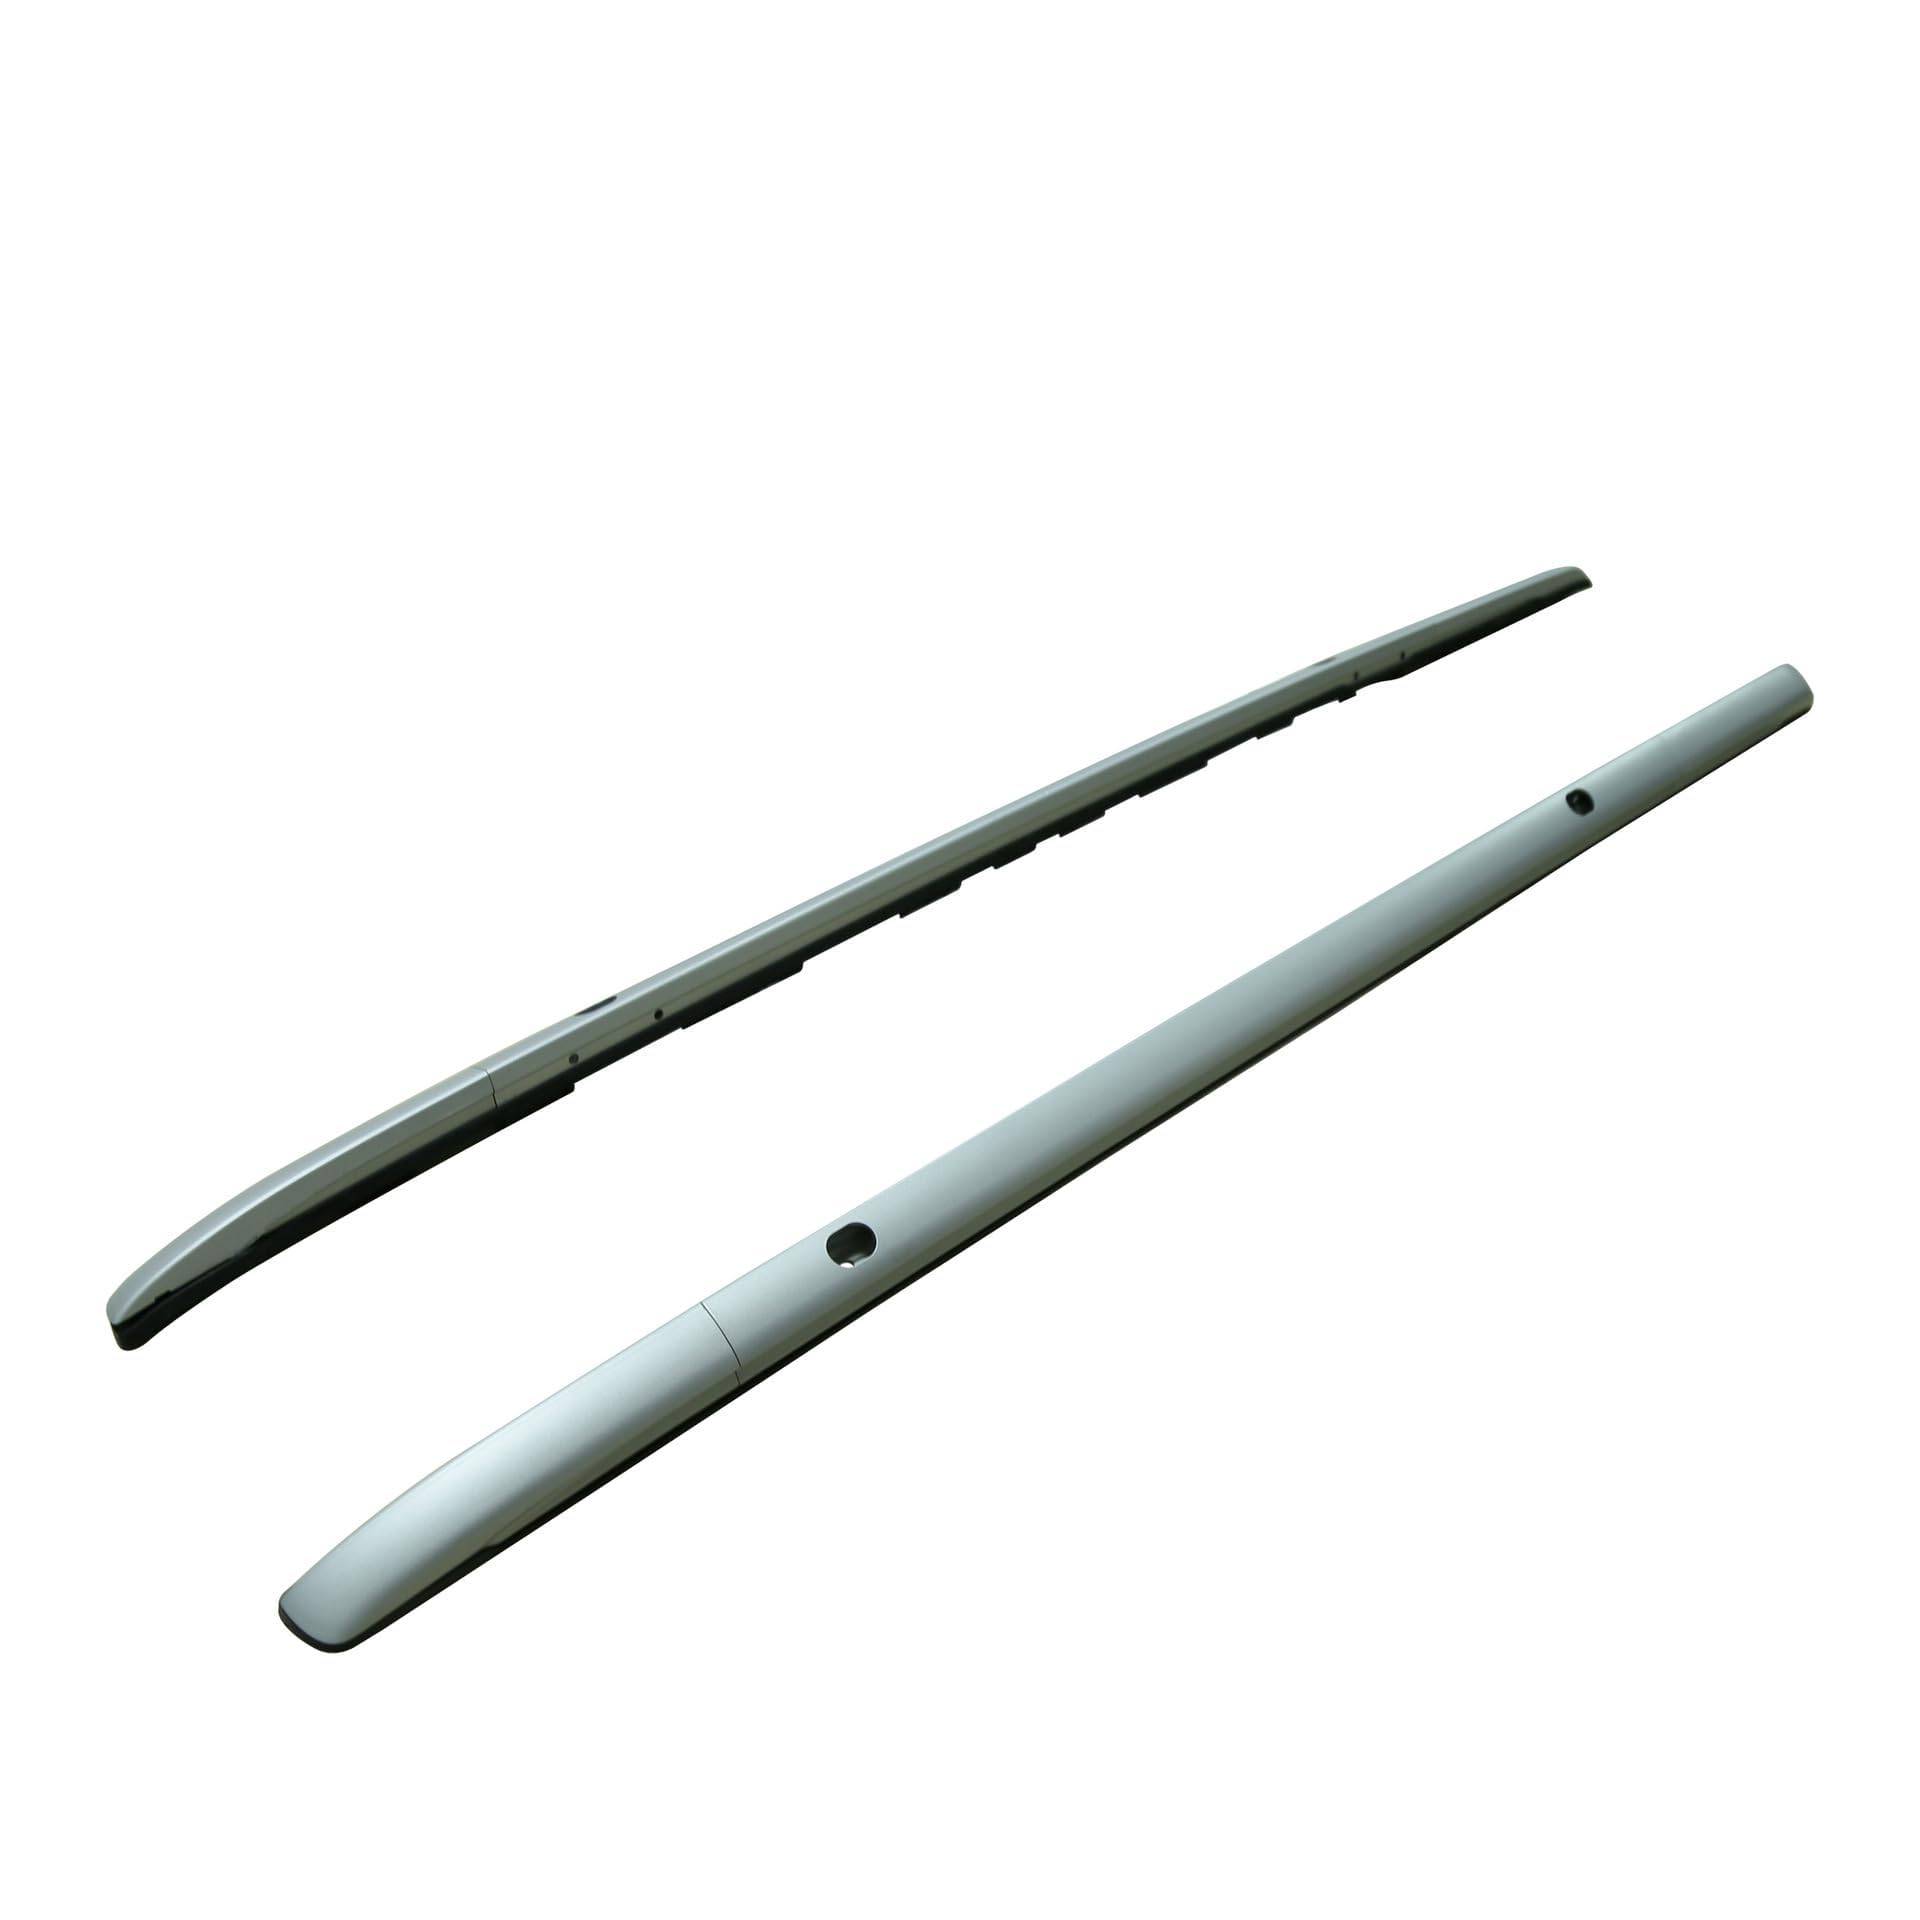 2 Stück Auto dachträger Längsstange für Kia Soul, Aluminium Dachträger Seitenschiene Bar Gepäckträger Dachträger Längsstange von NUSHKE